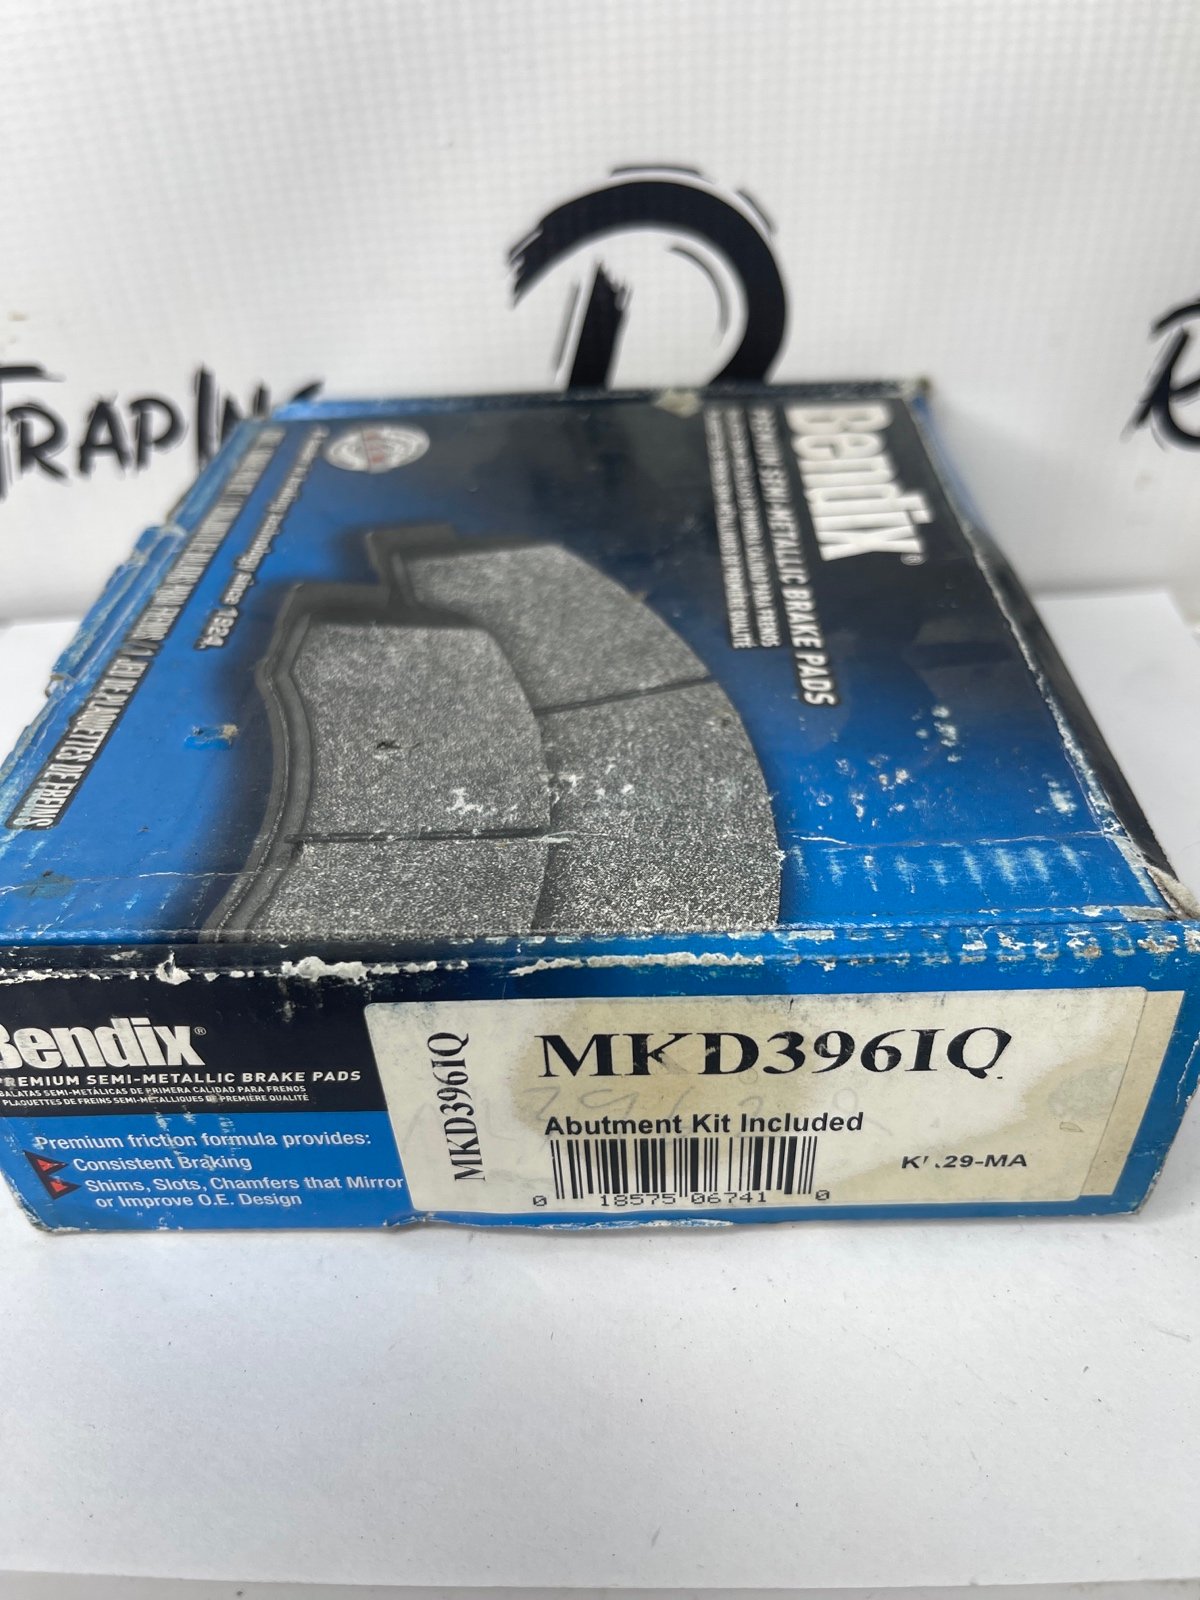 Bendix Ceramic Brake Pads MKD396IQ ftxuAJ6cO